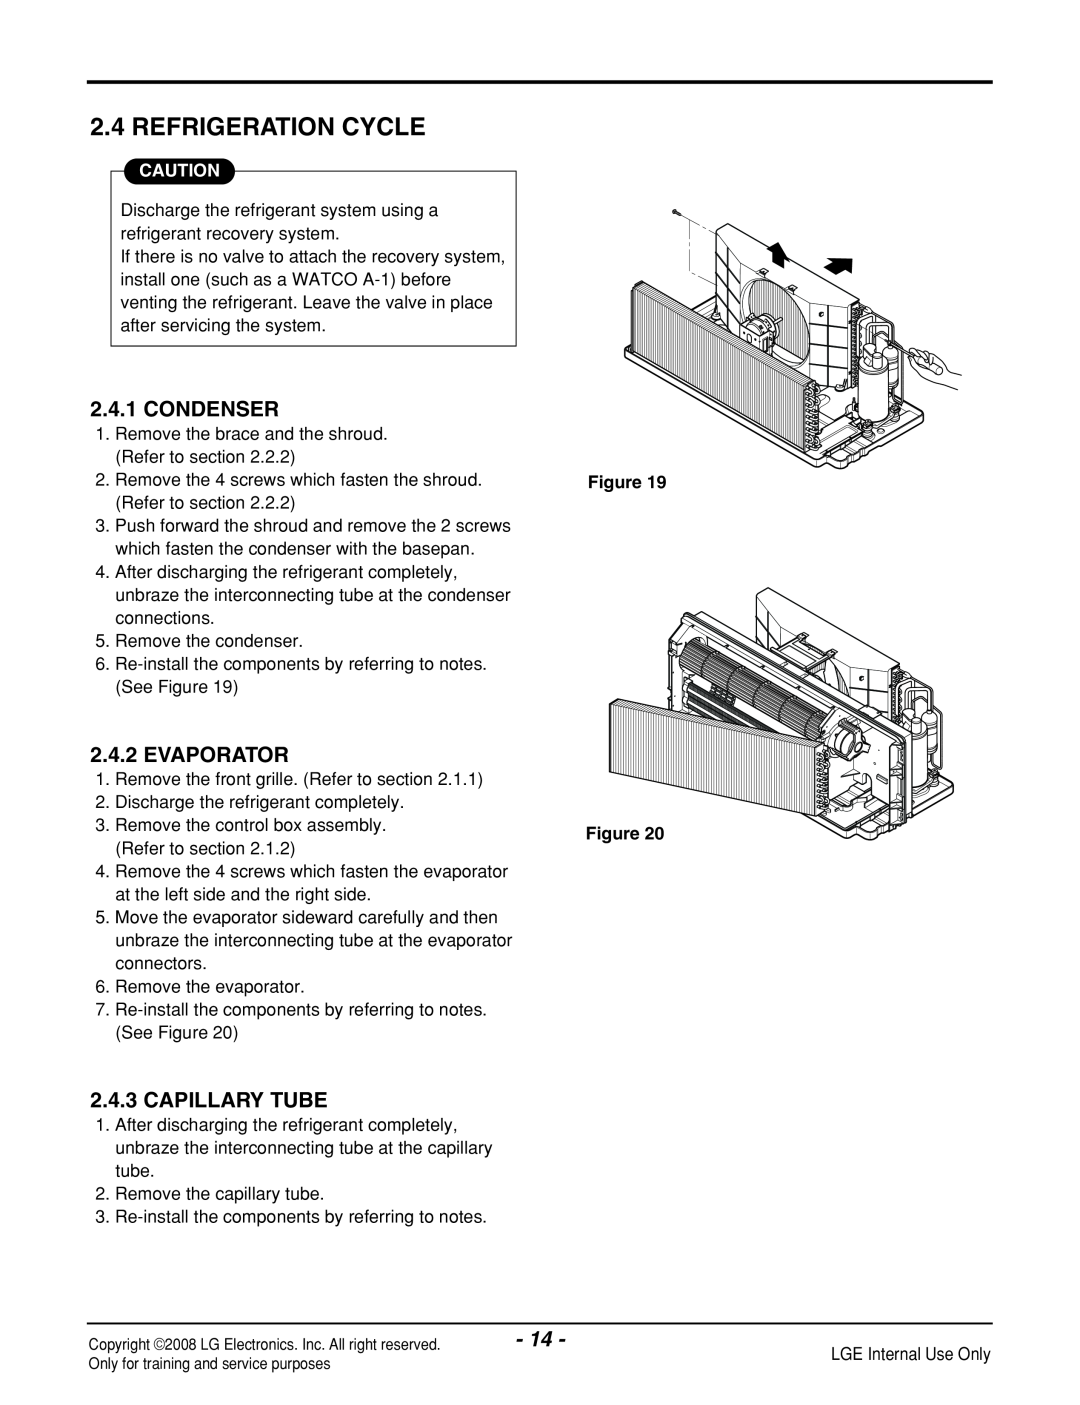 LG Electronics LP121CEM-Y8 manual Refrigeration Cycle, Condenser, Evaporator, Capillary Tube 